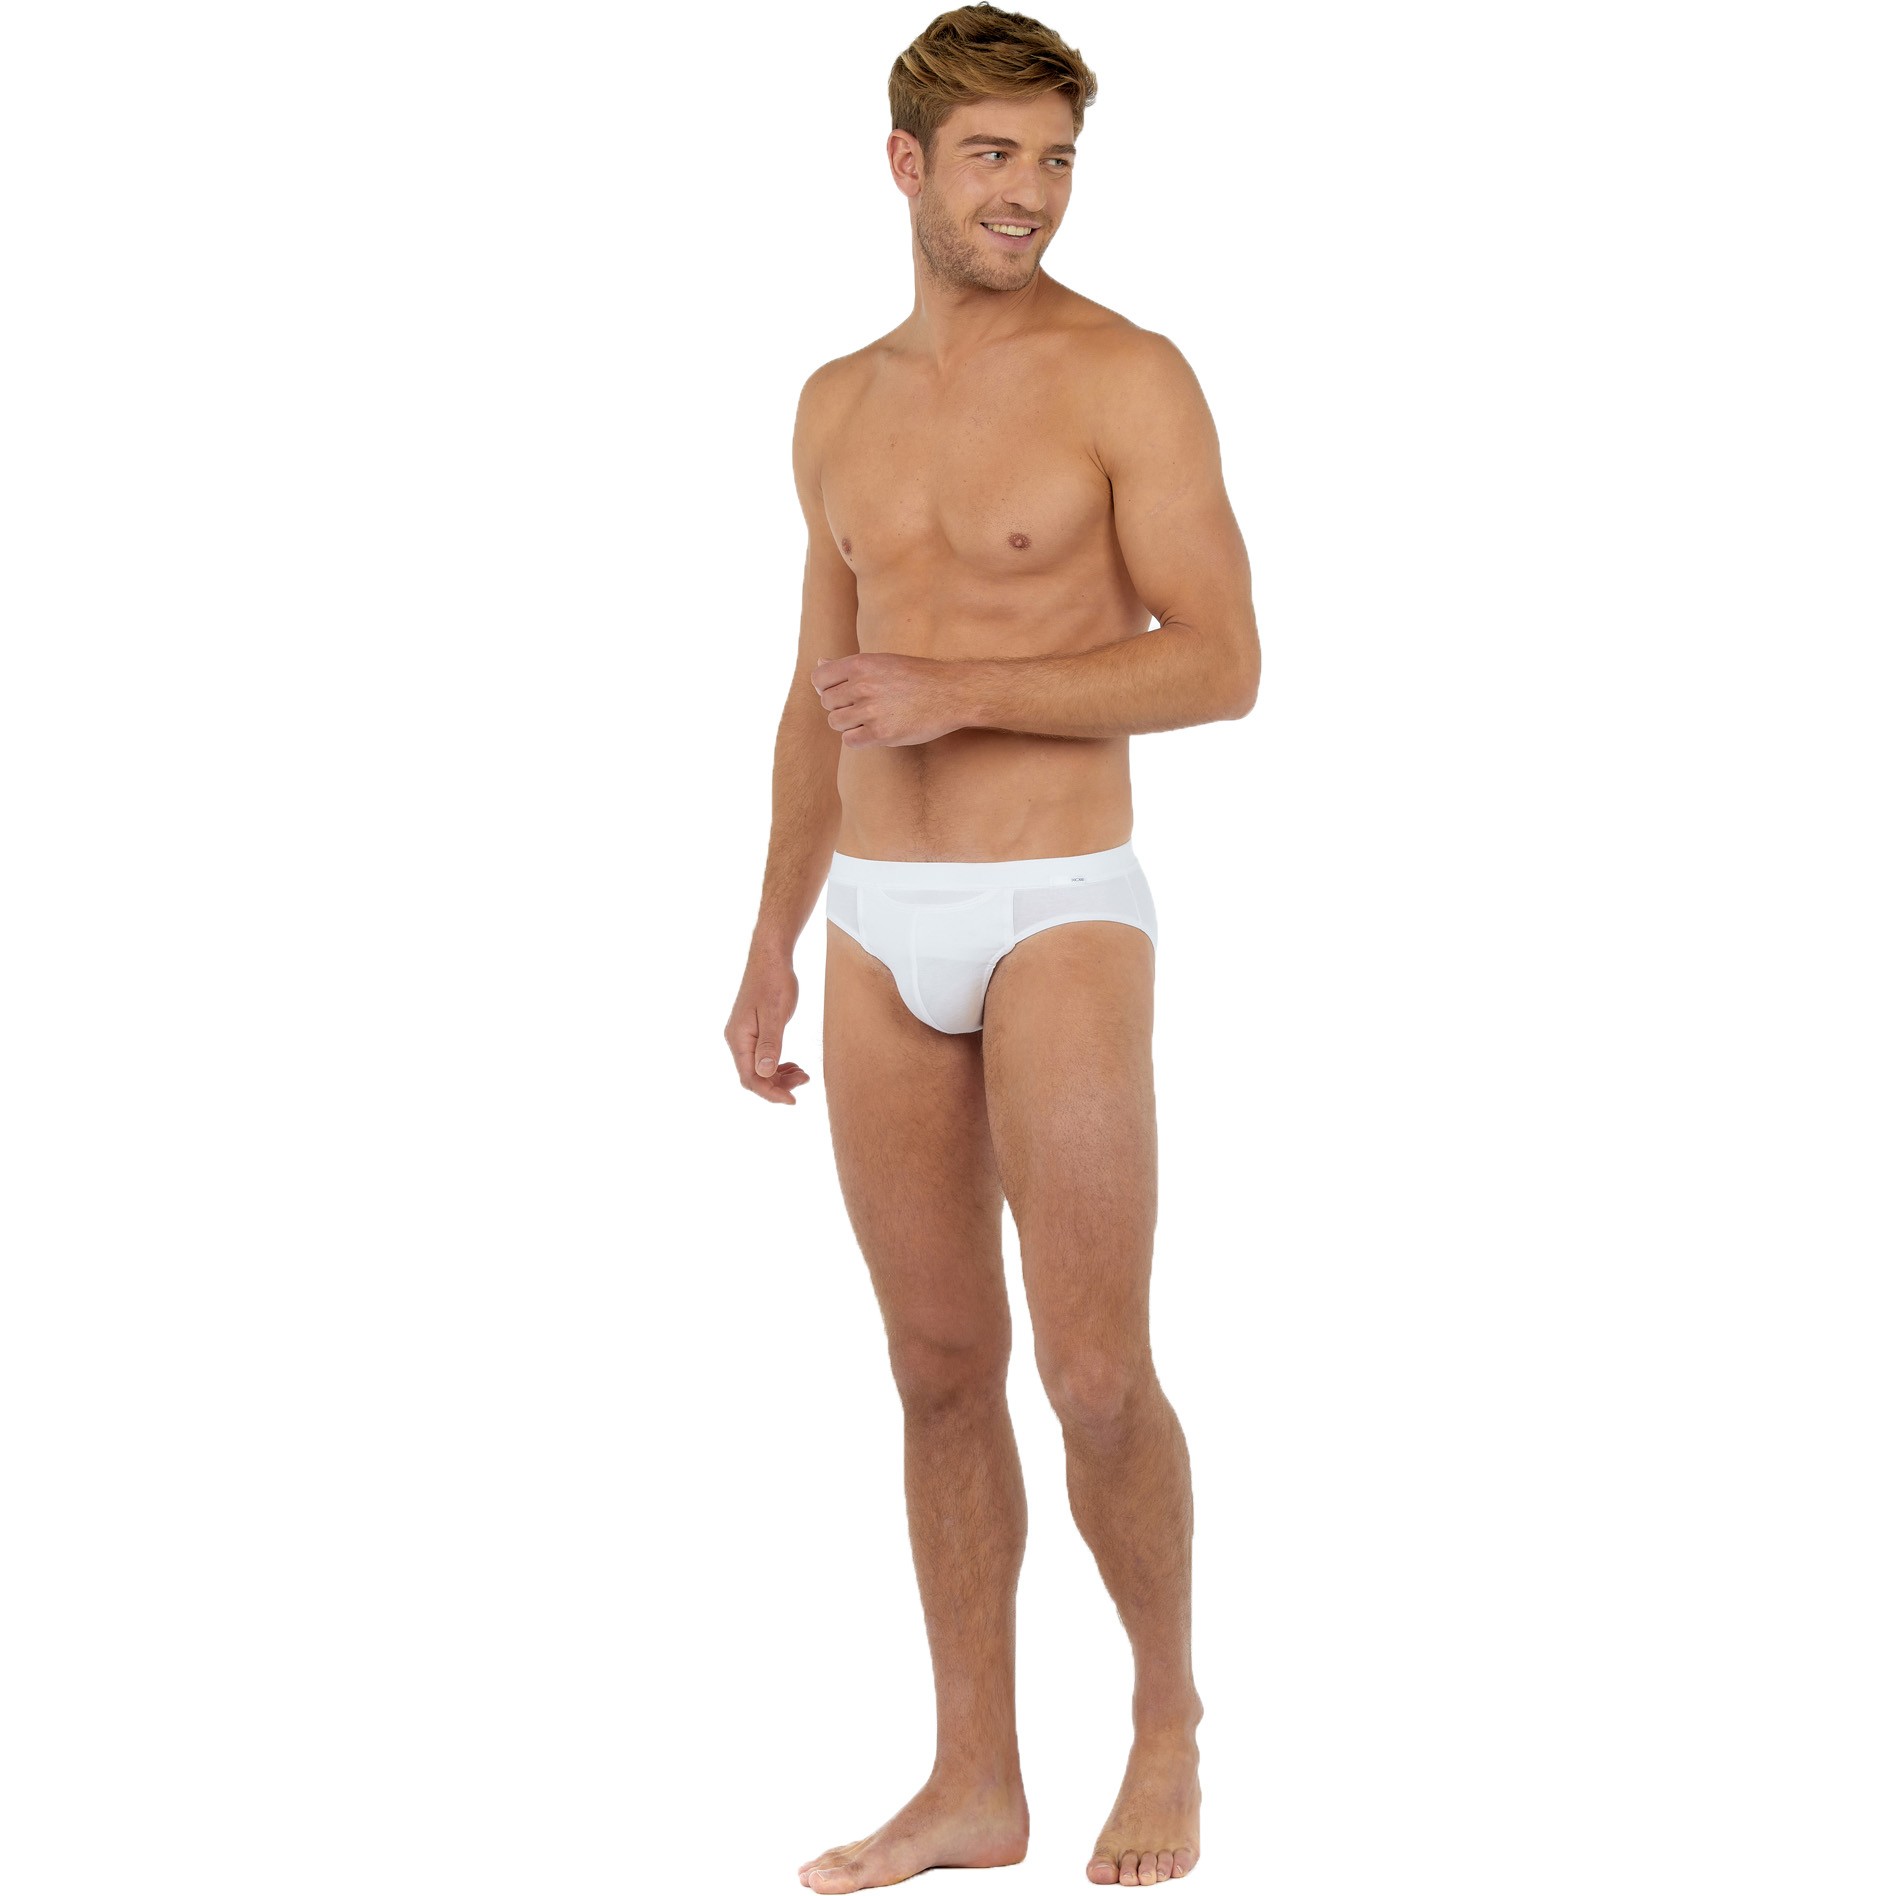 Mini Brief Comfort HO1 Tencel Soft - white: Briefs for man brand HO